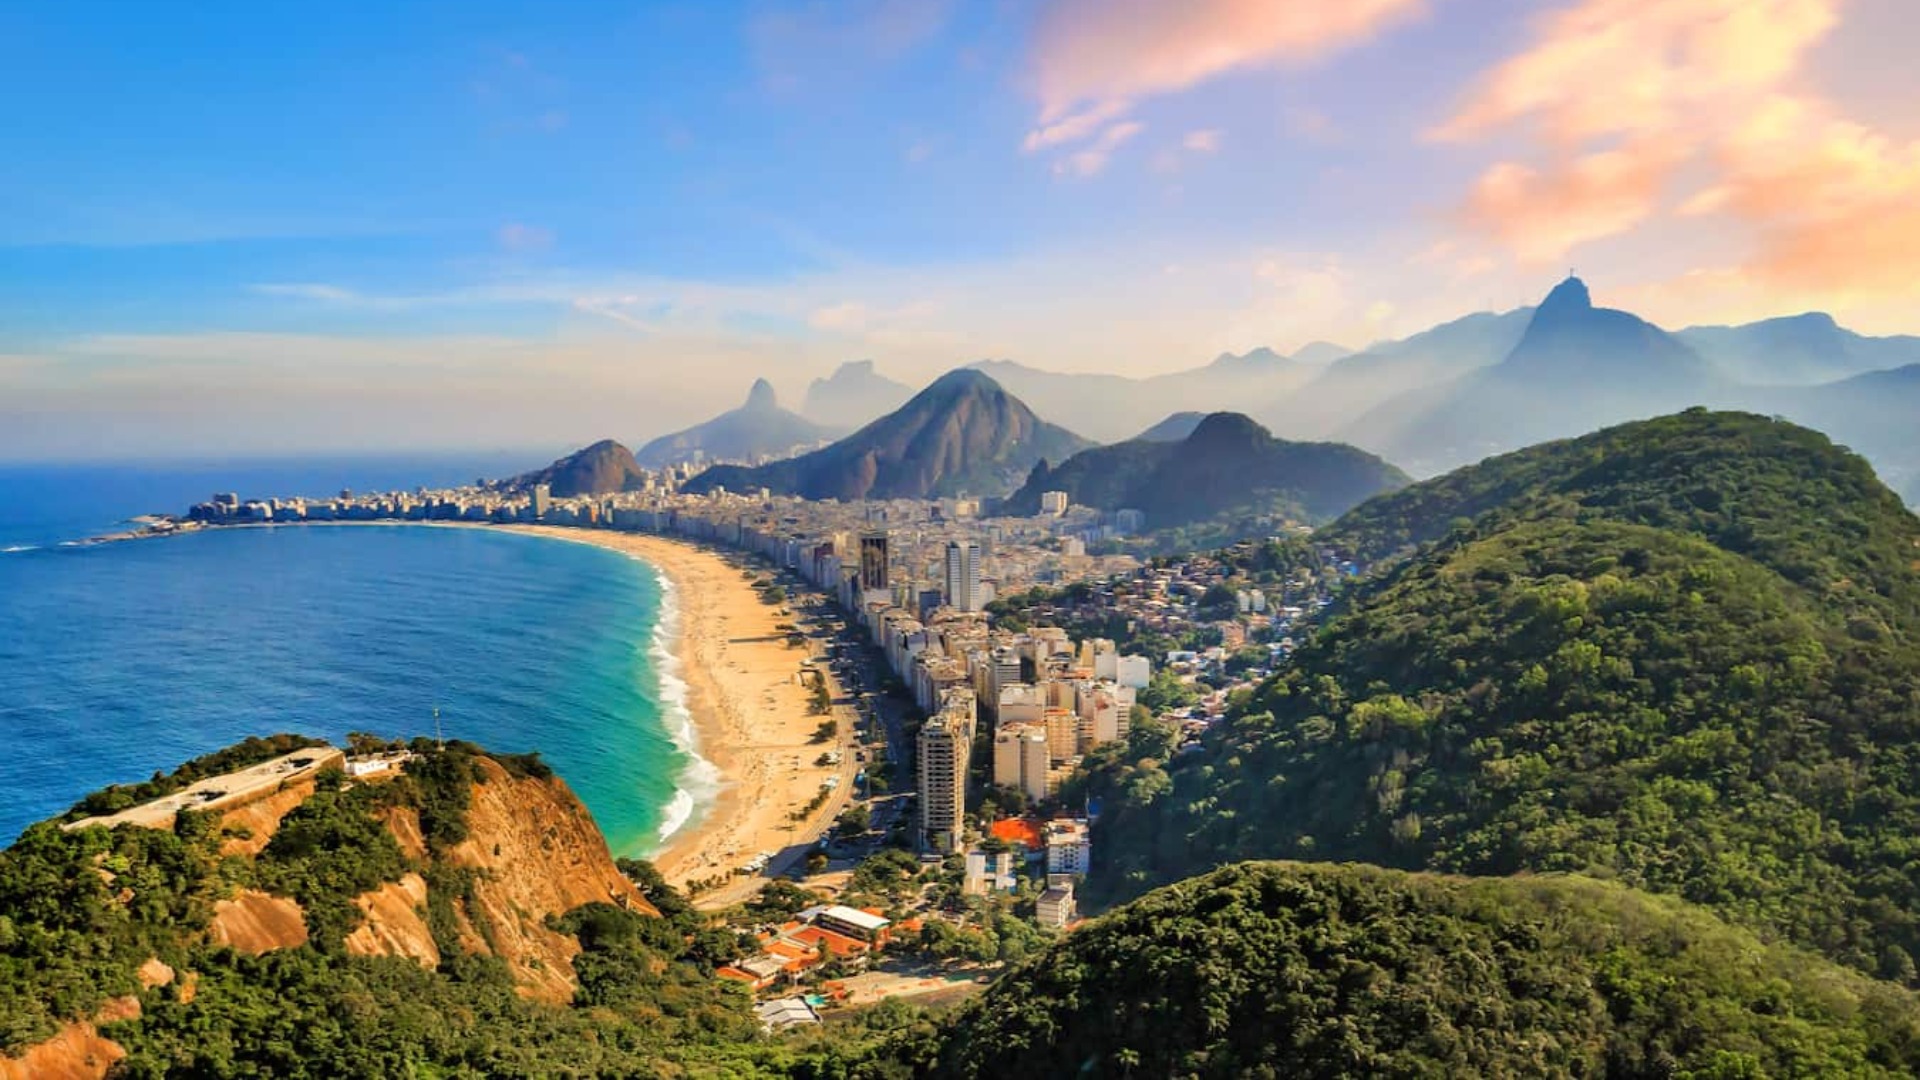 Tourism in Brazil: Rio de Janeiro and Sao Paulo lead the recovery